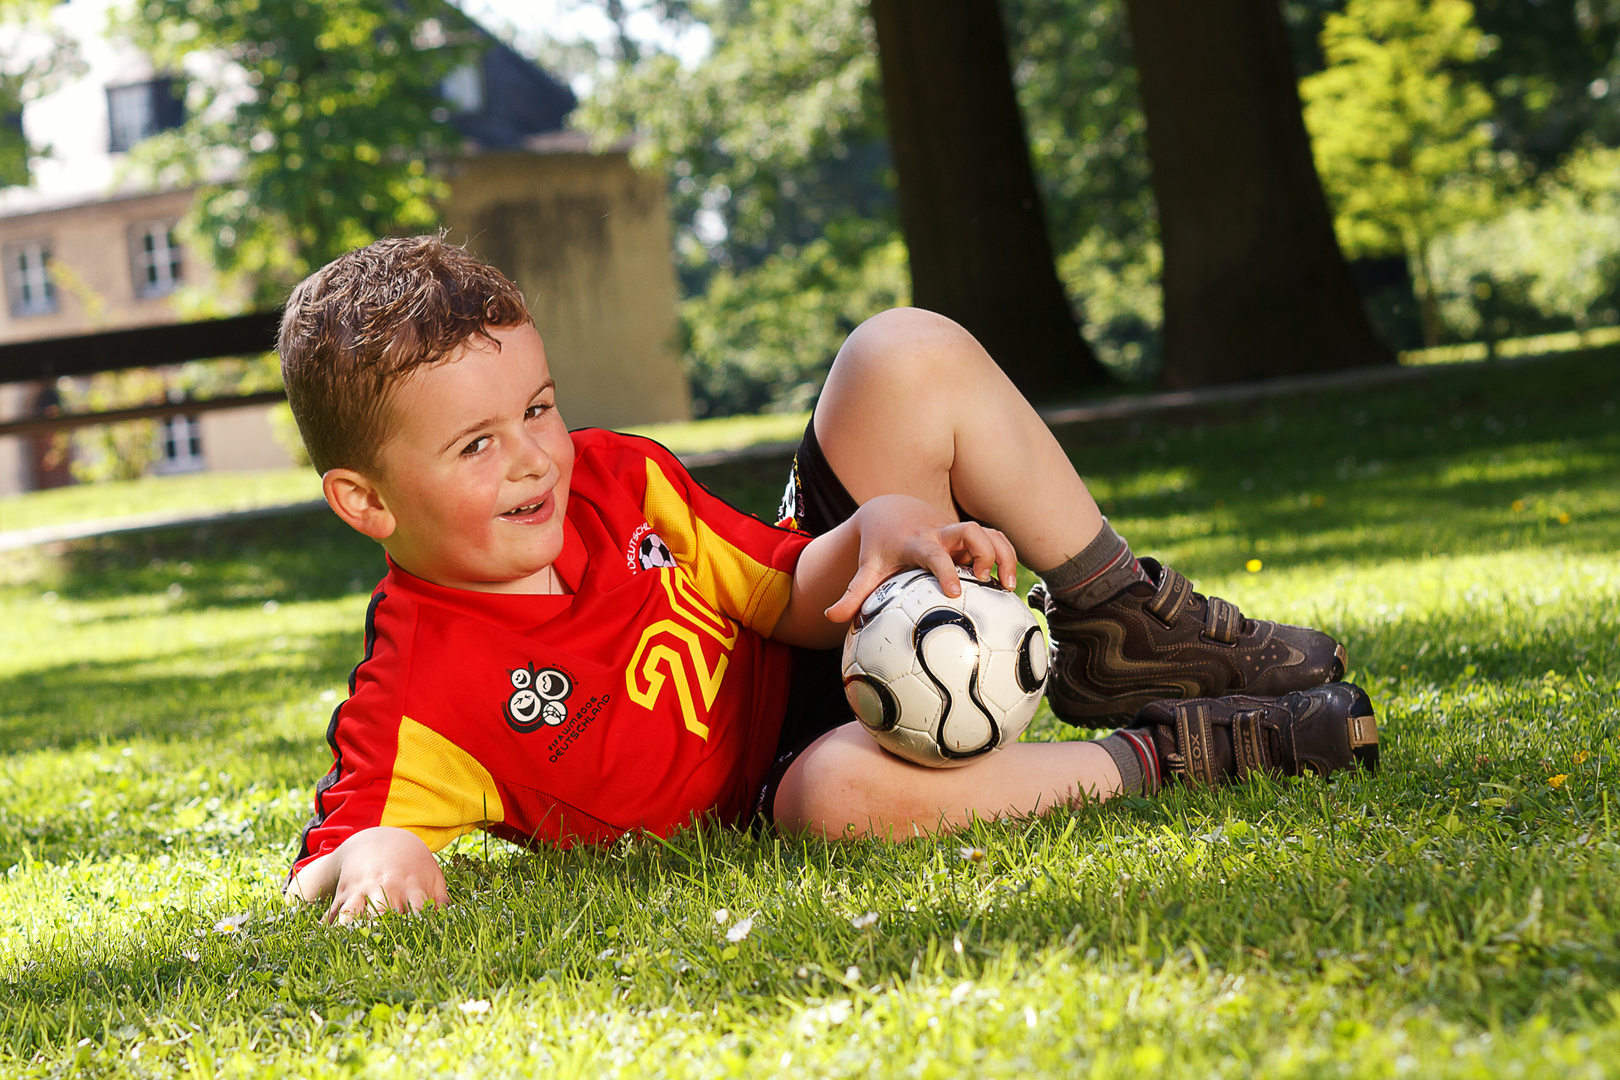 Fussball Star Foto & Bild | kinder, junge, fussball Bilder ...